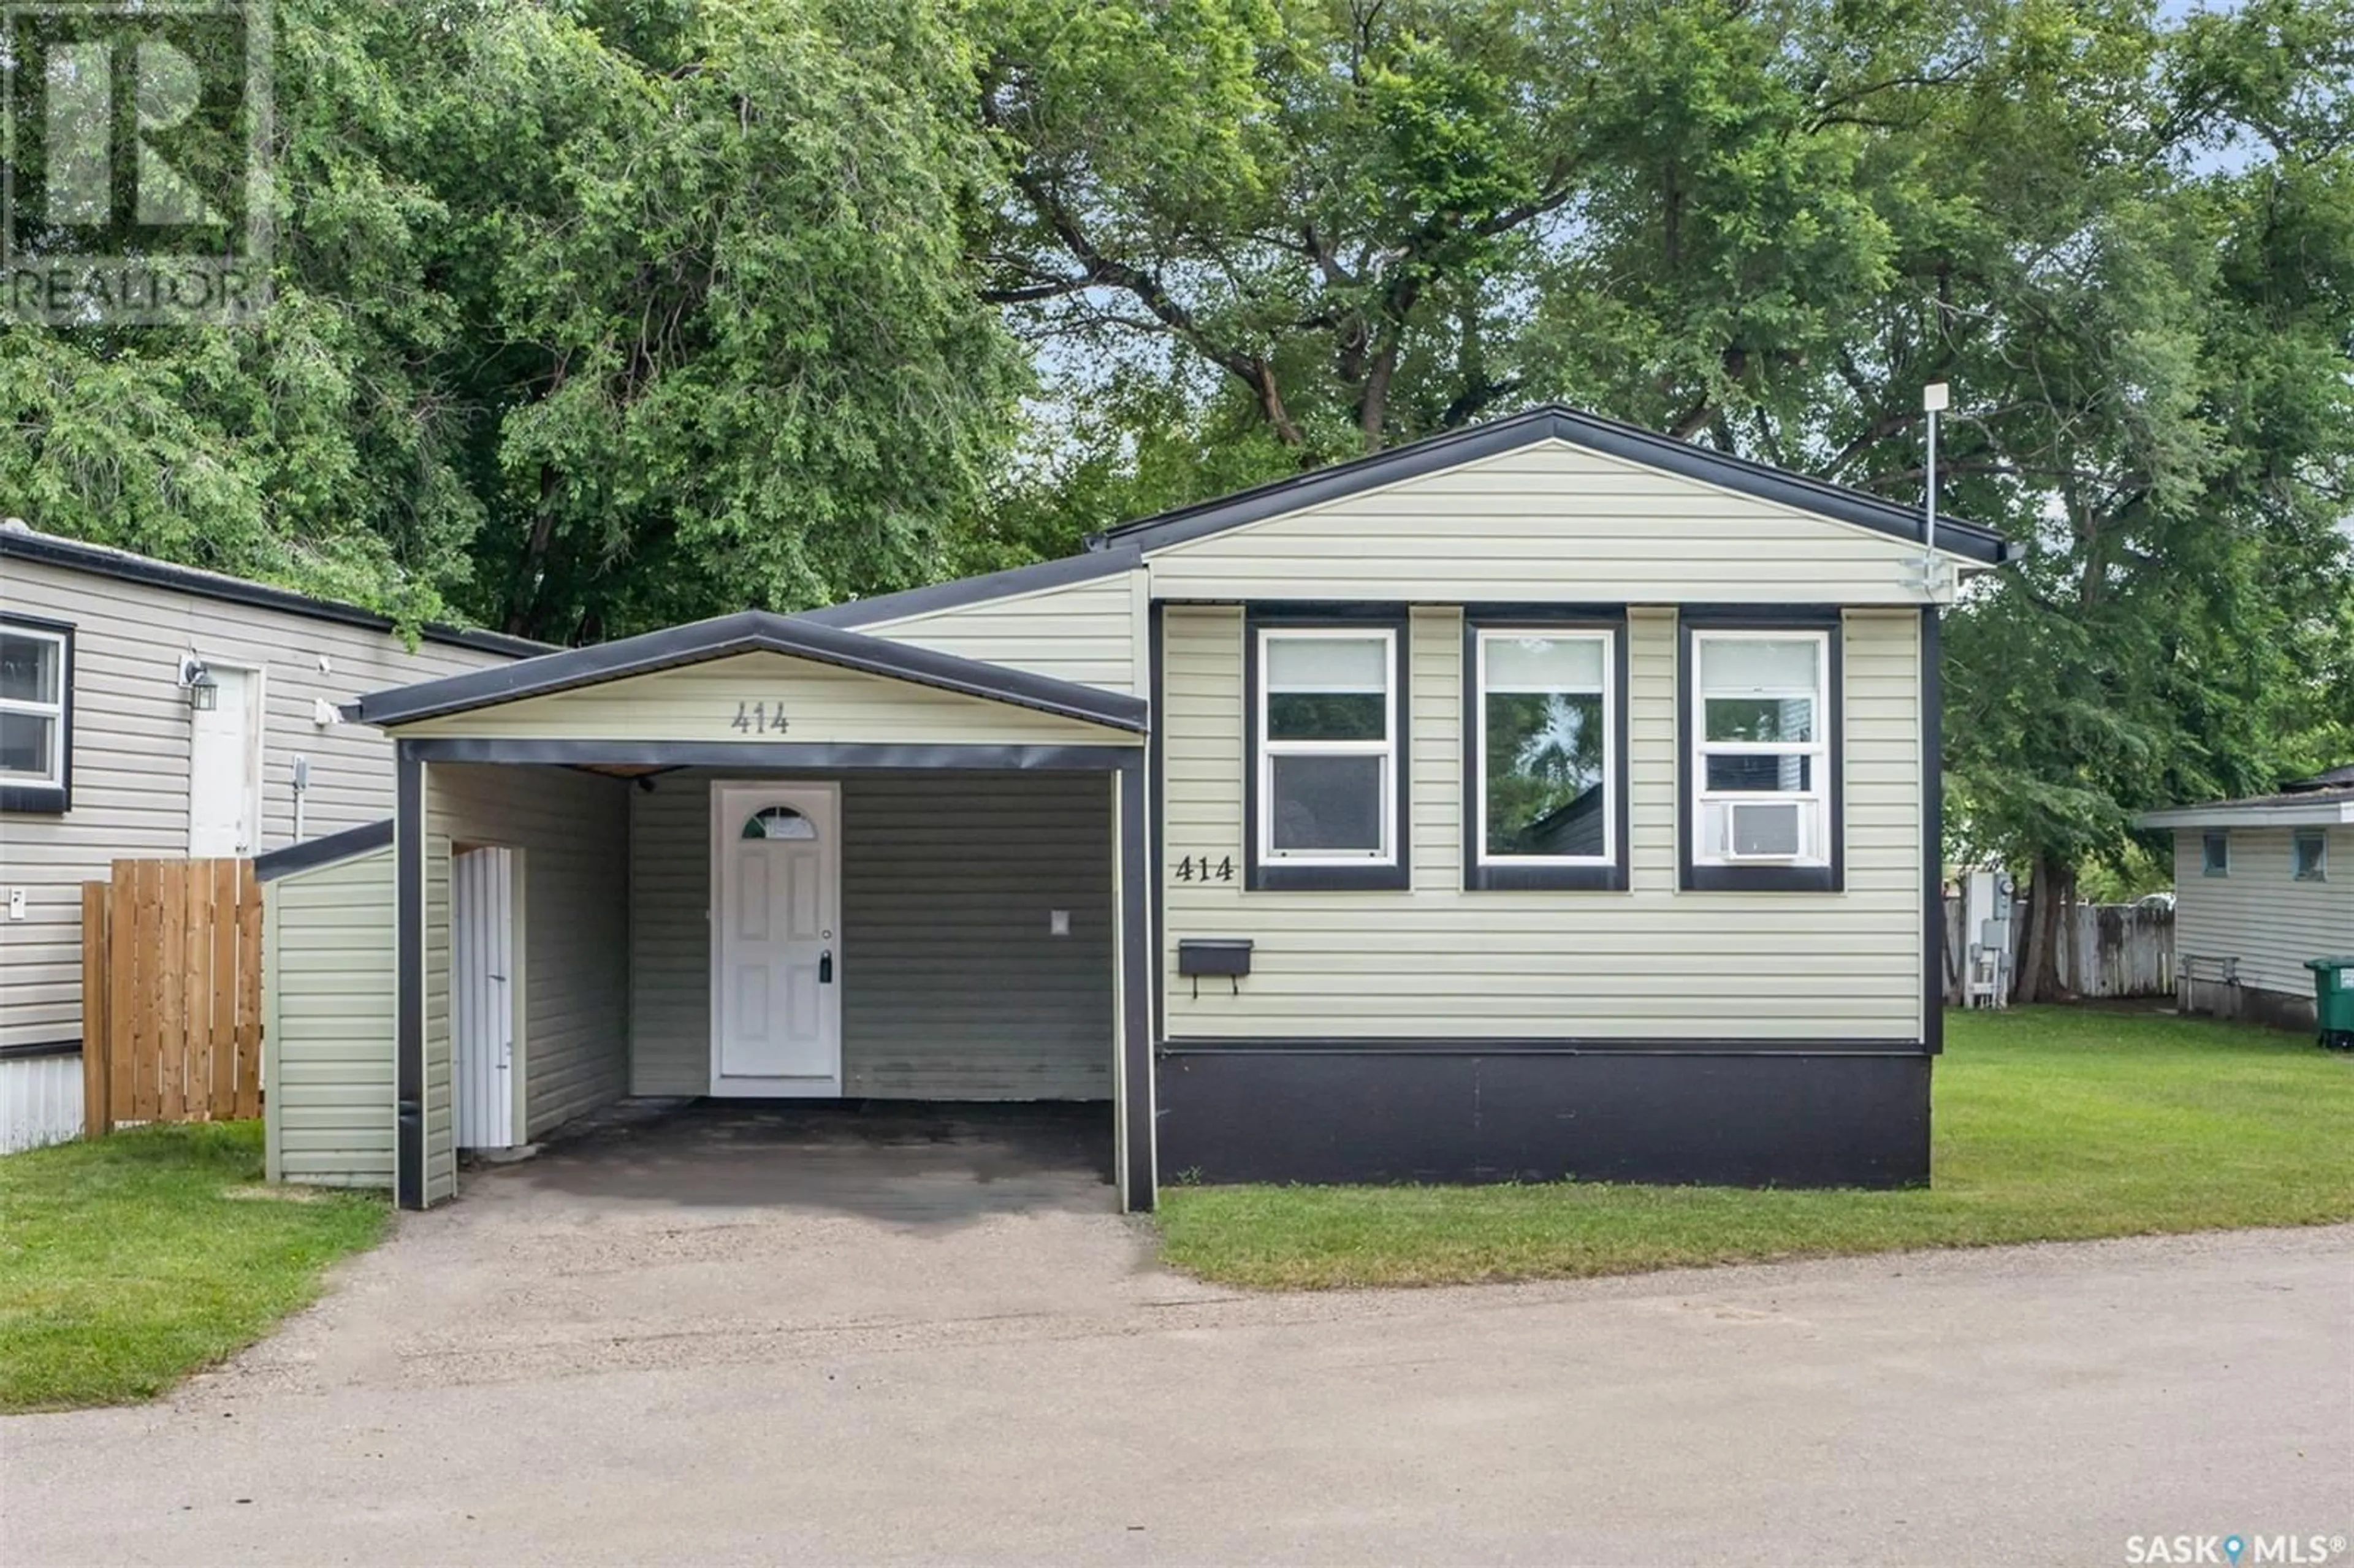 Home with vinyl exterior material for 414 1524 Rayner AVENUE, Saskatoon Saskatchewan S7N1Y1